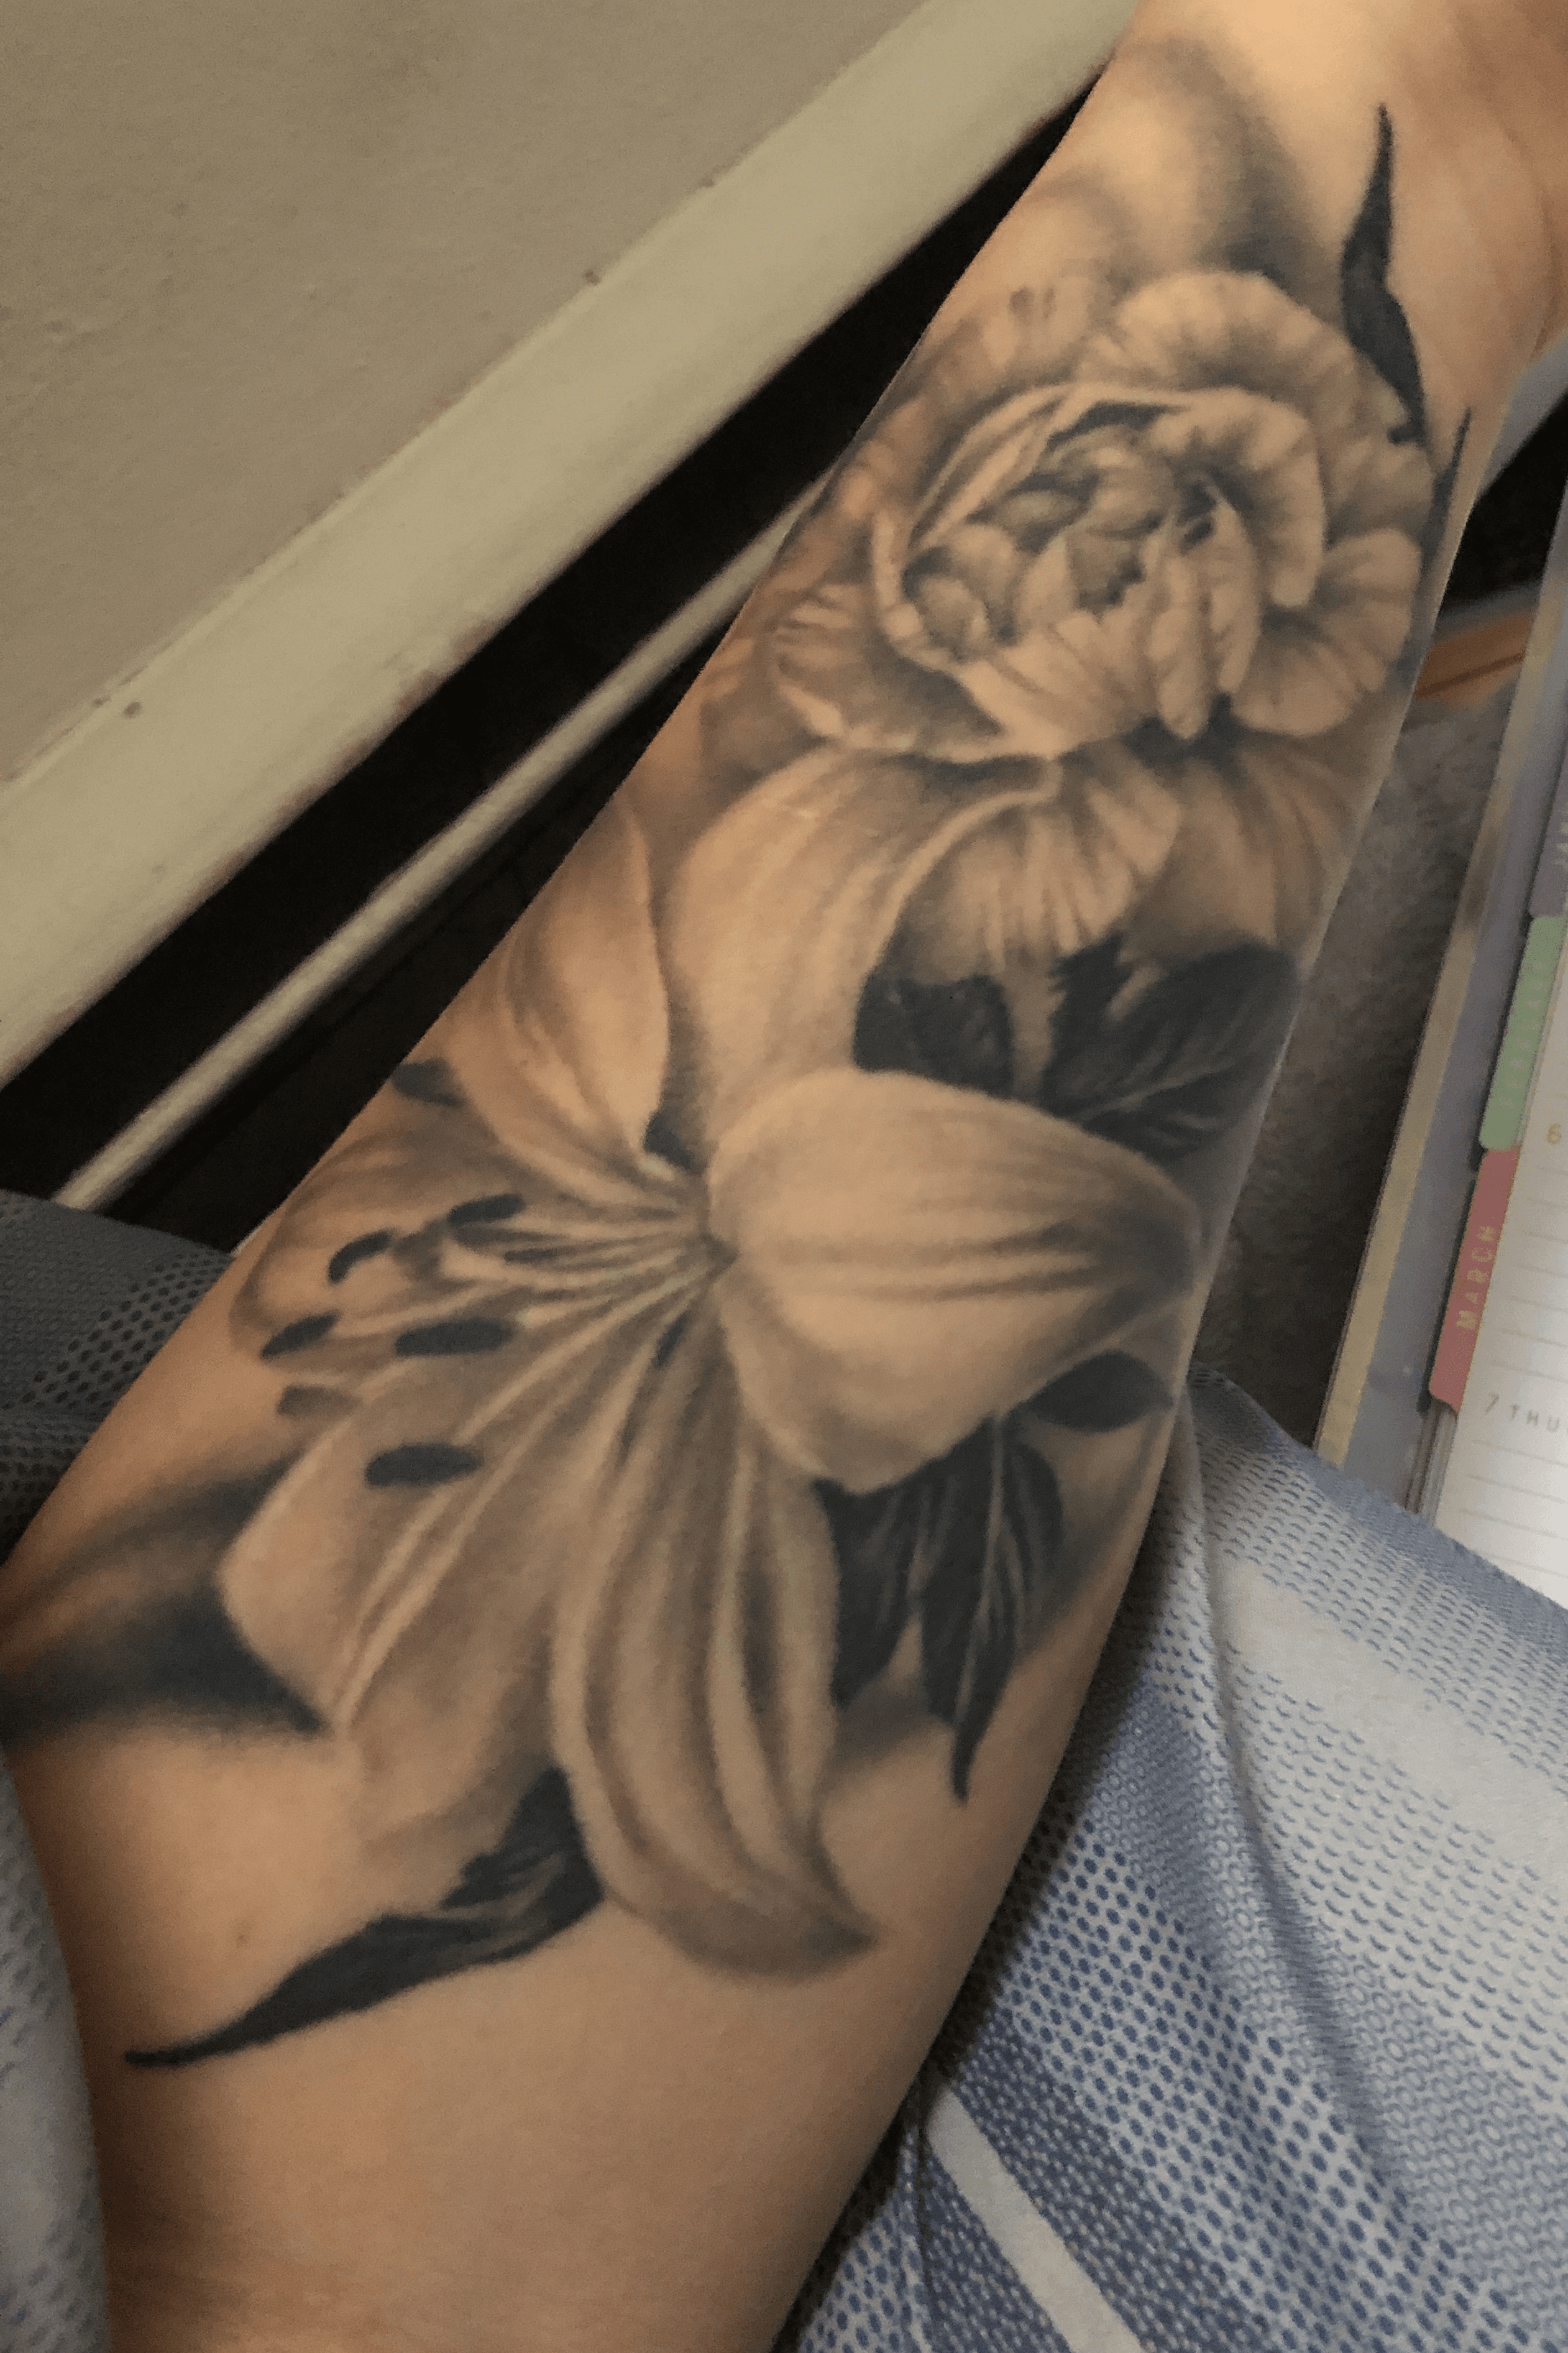 black and white carnation tattoo